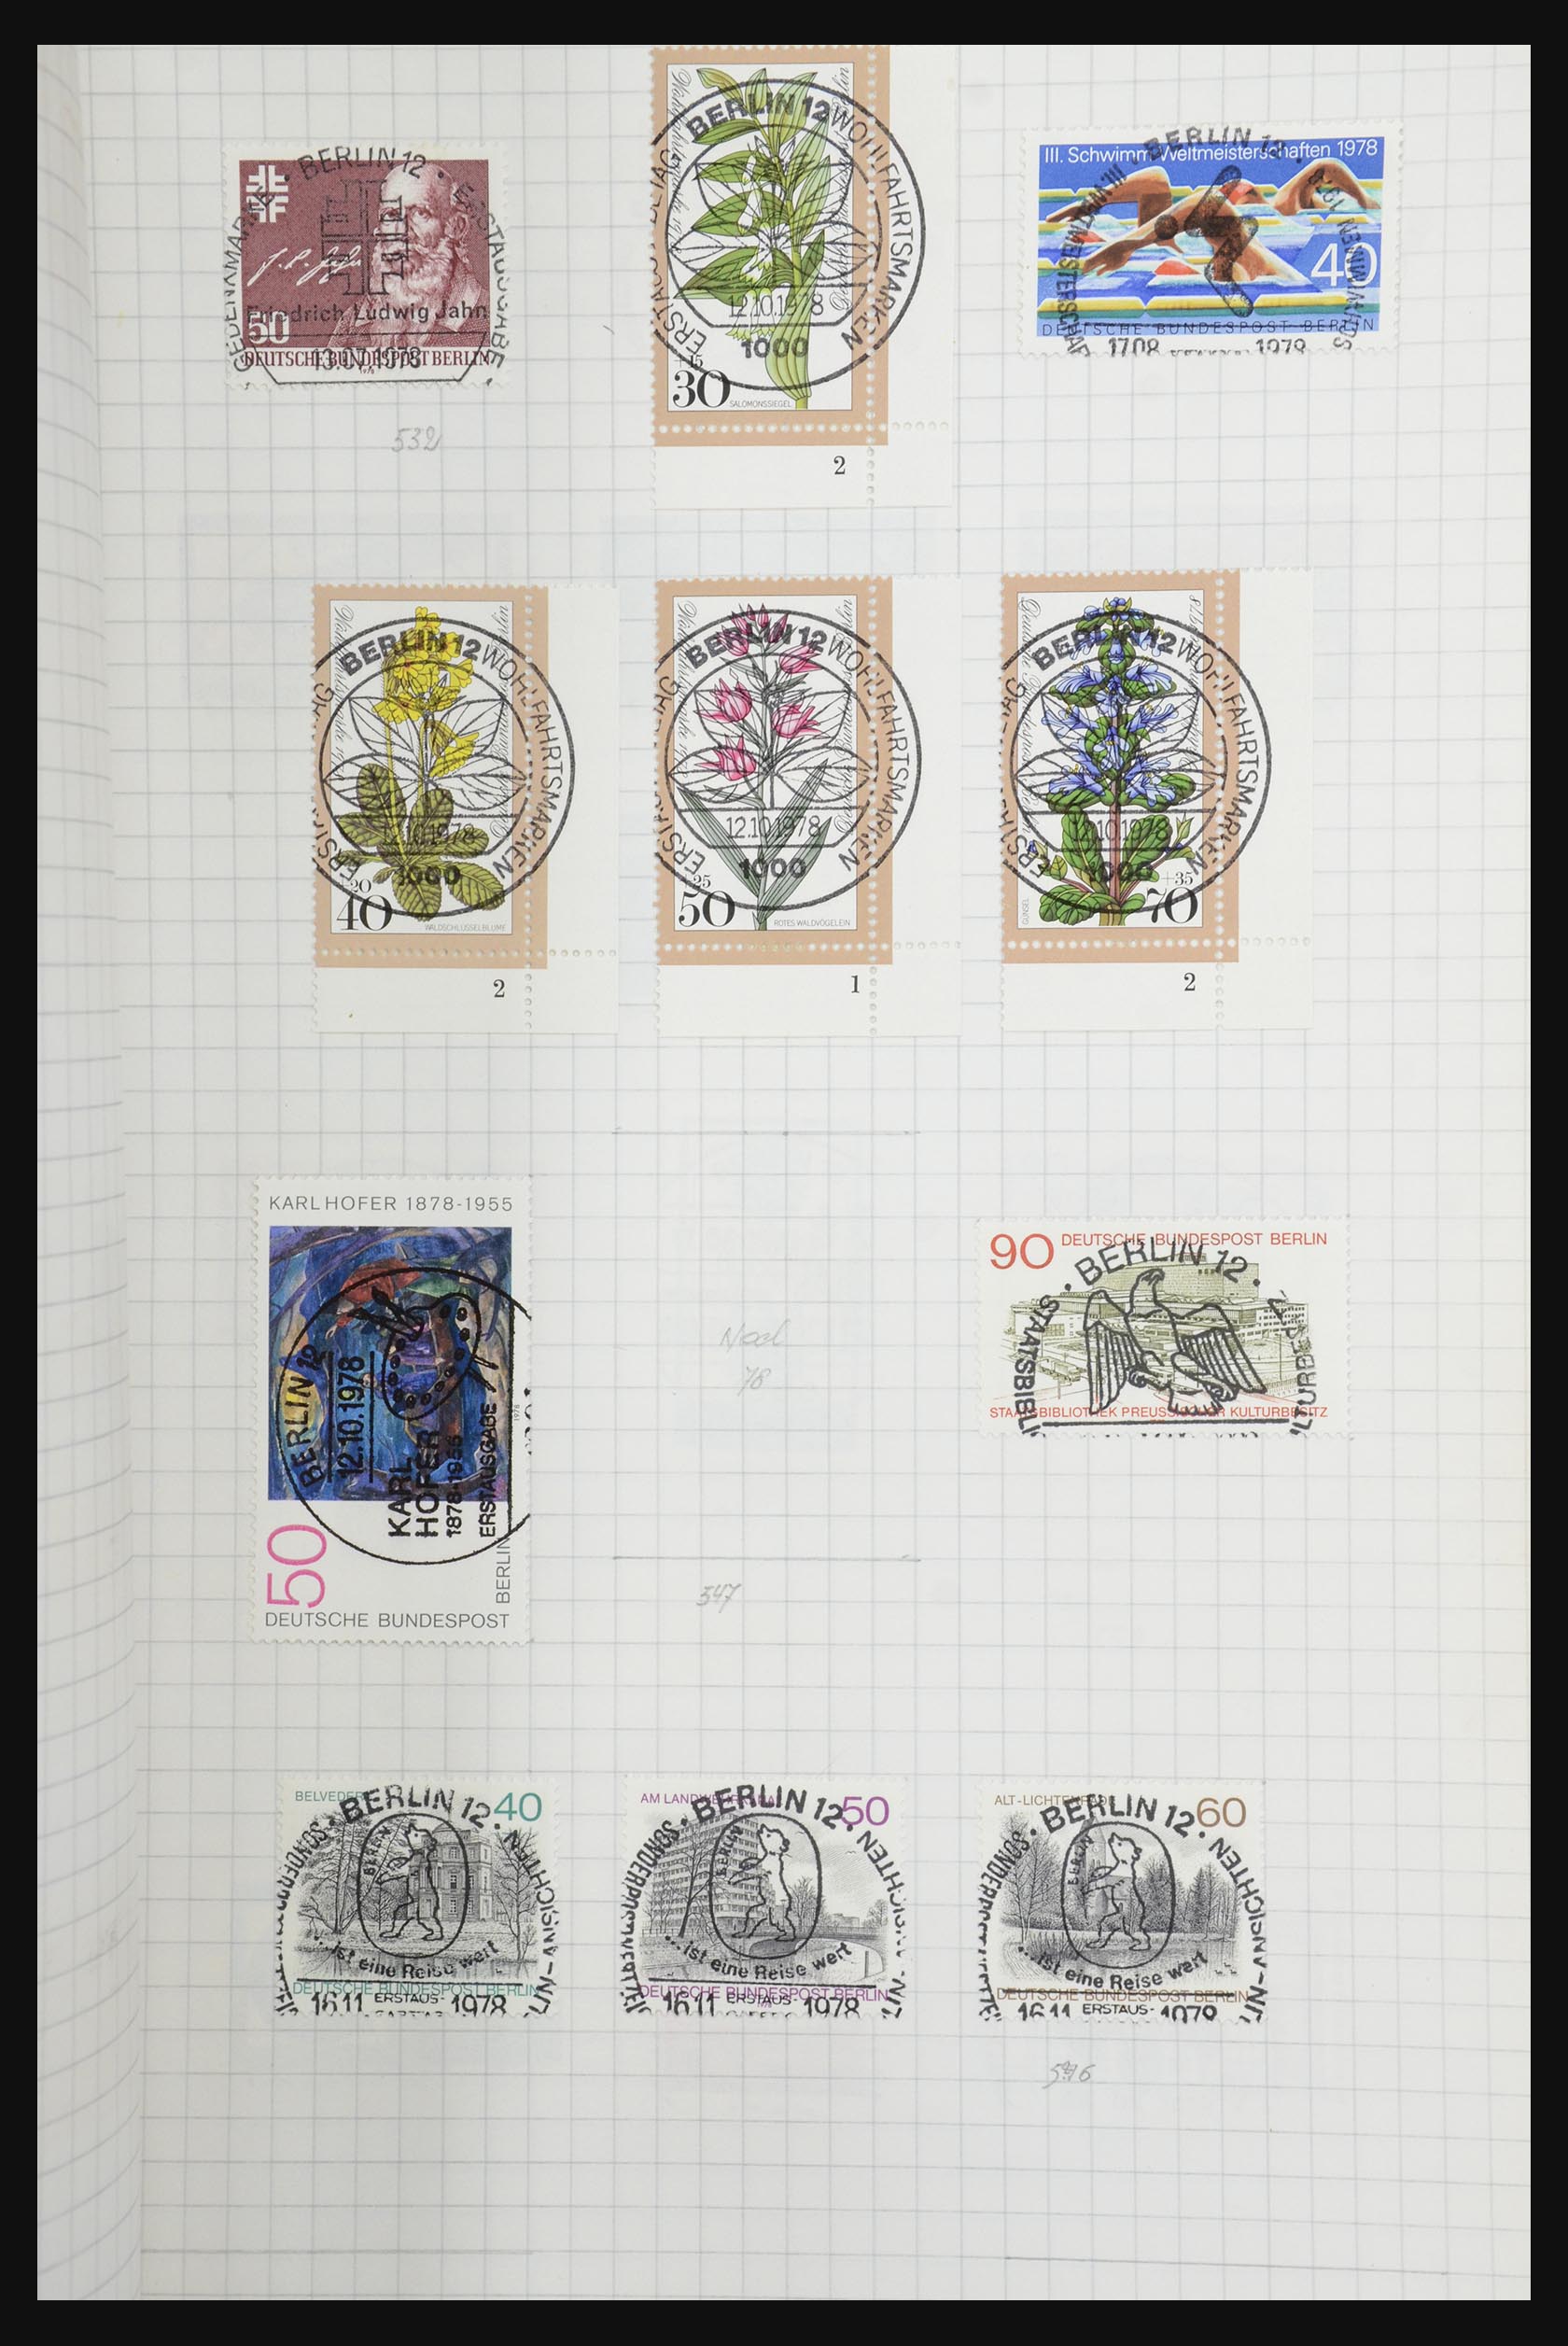 32398 196 - 32398 Bundespost and Berlin 1948-1984.